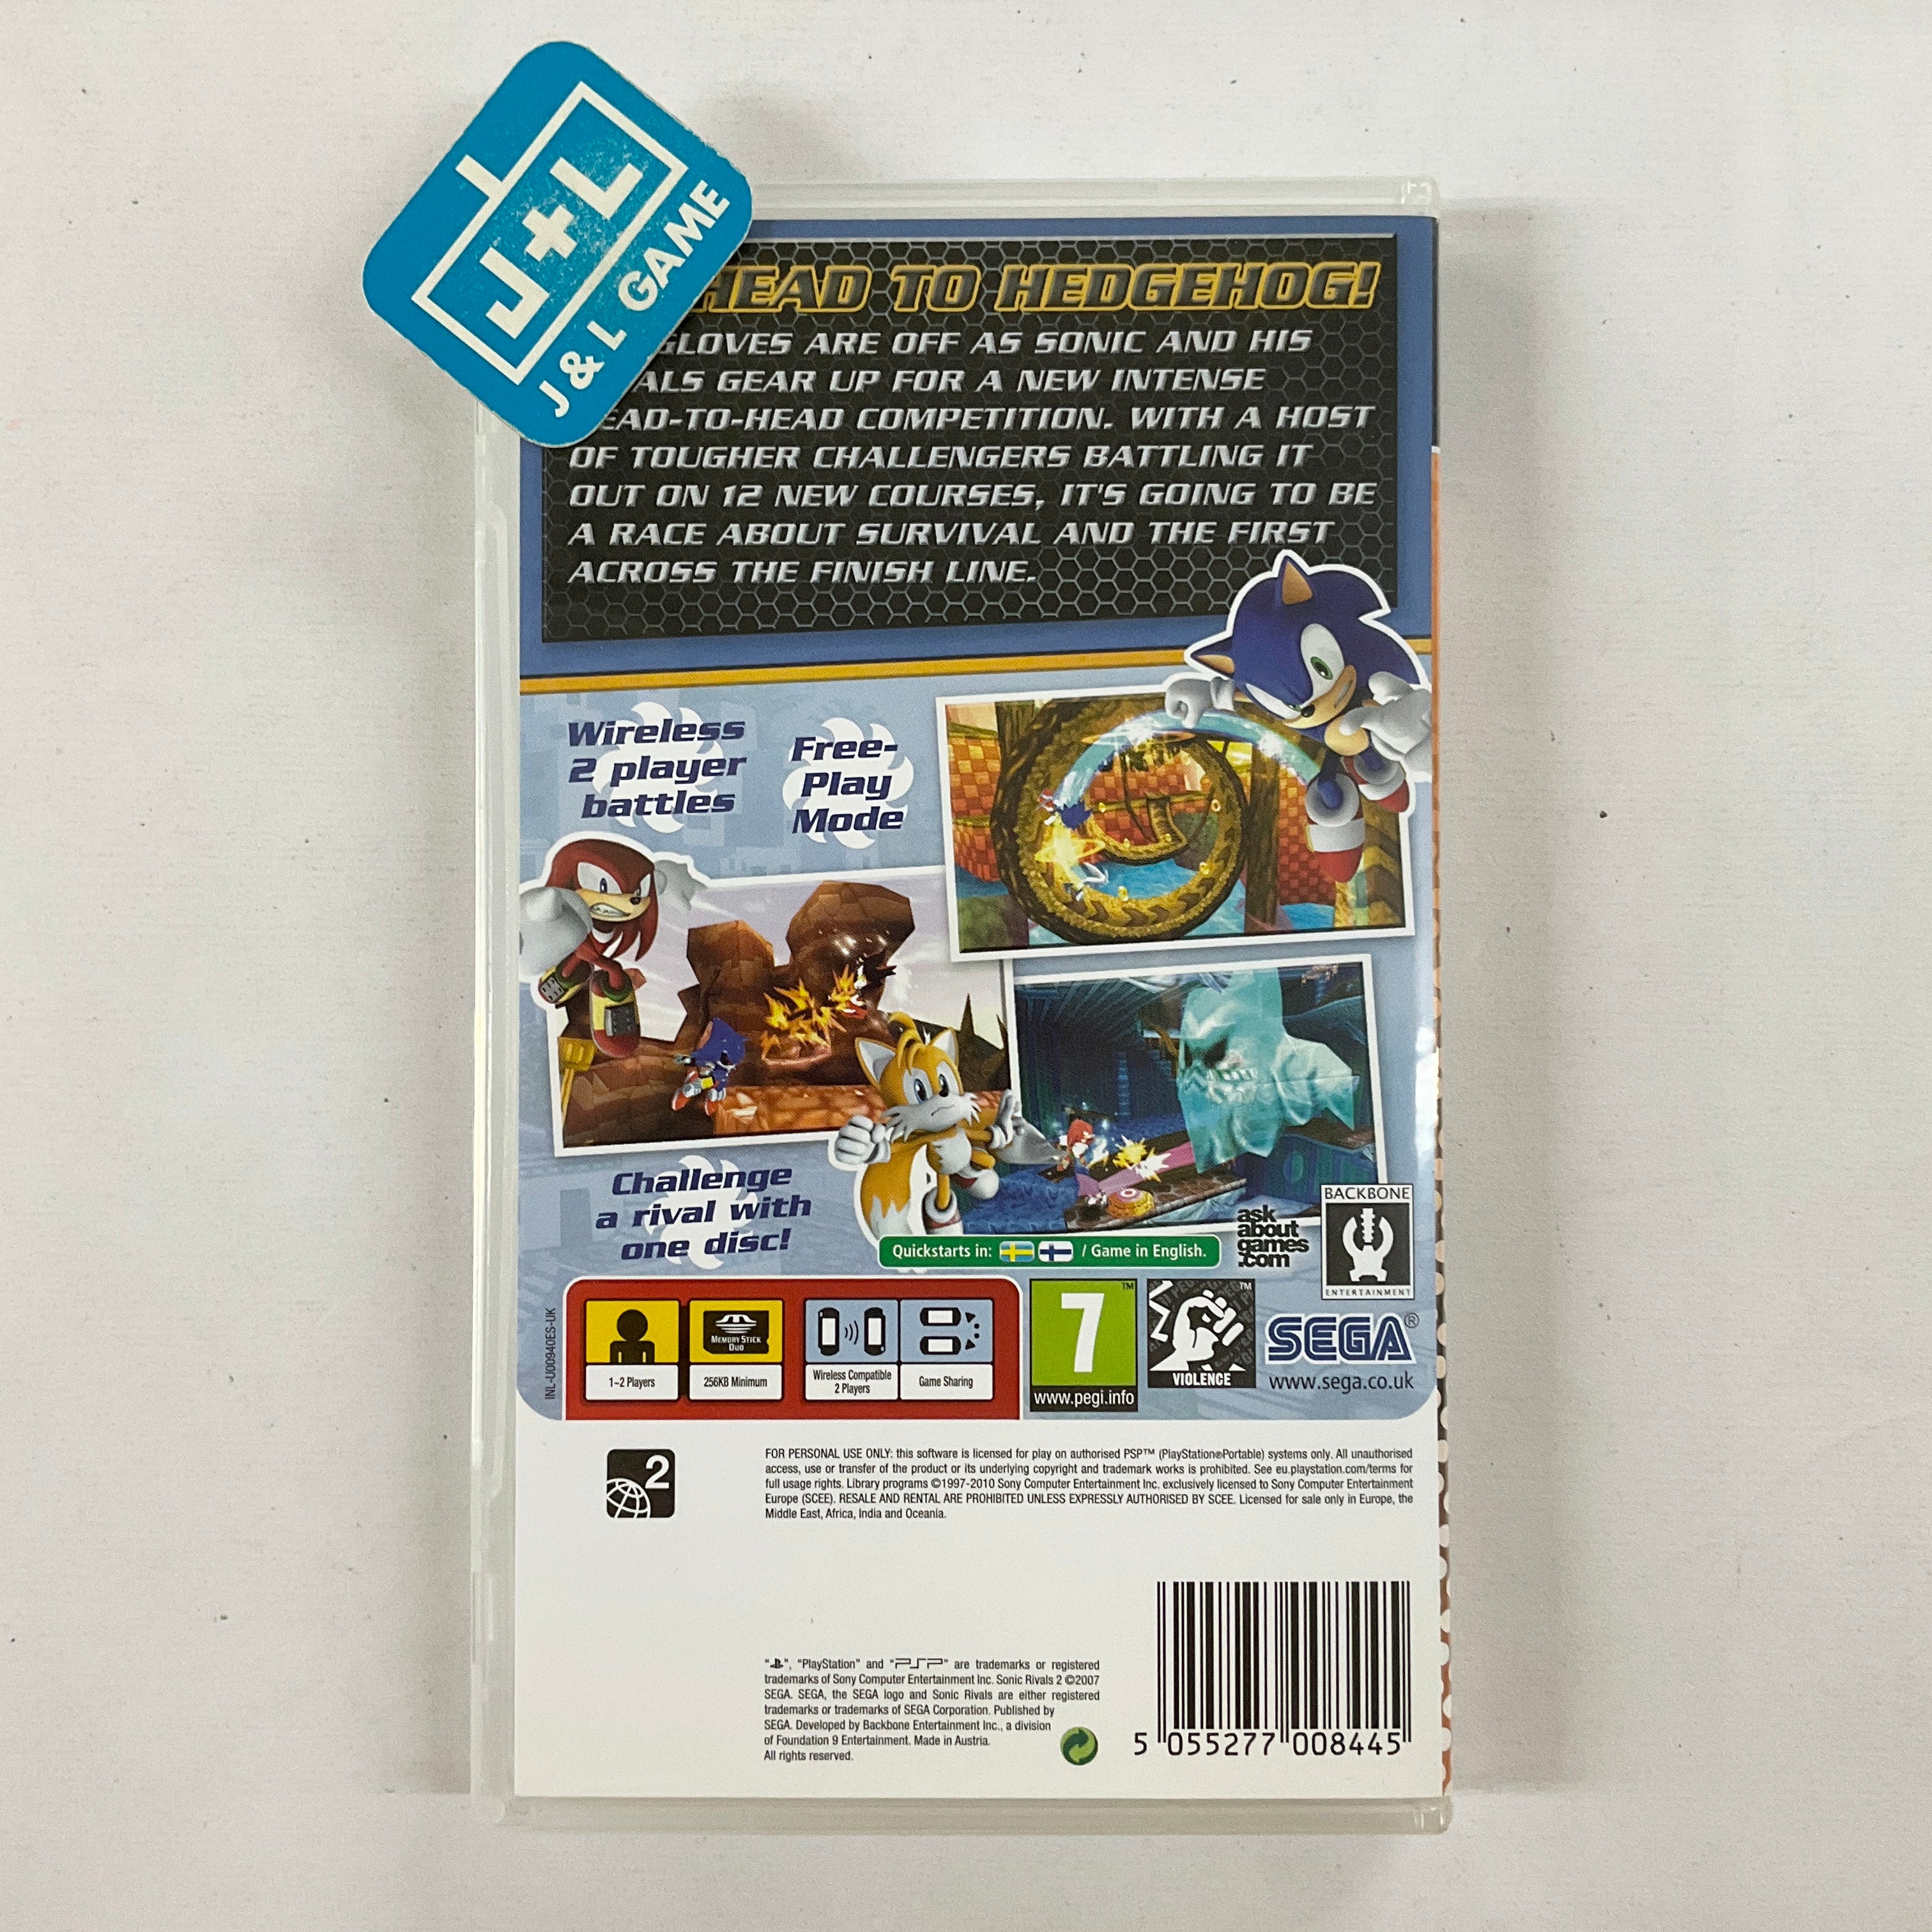 Sonic Rivals 2 (PSP Essentials) - SONY PSP [Pre-Owned] (European Import) Video Games Sega   